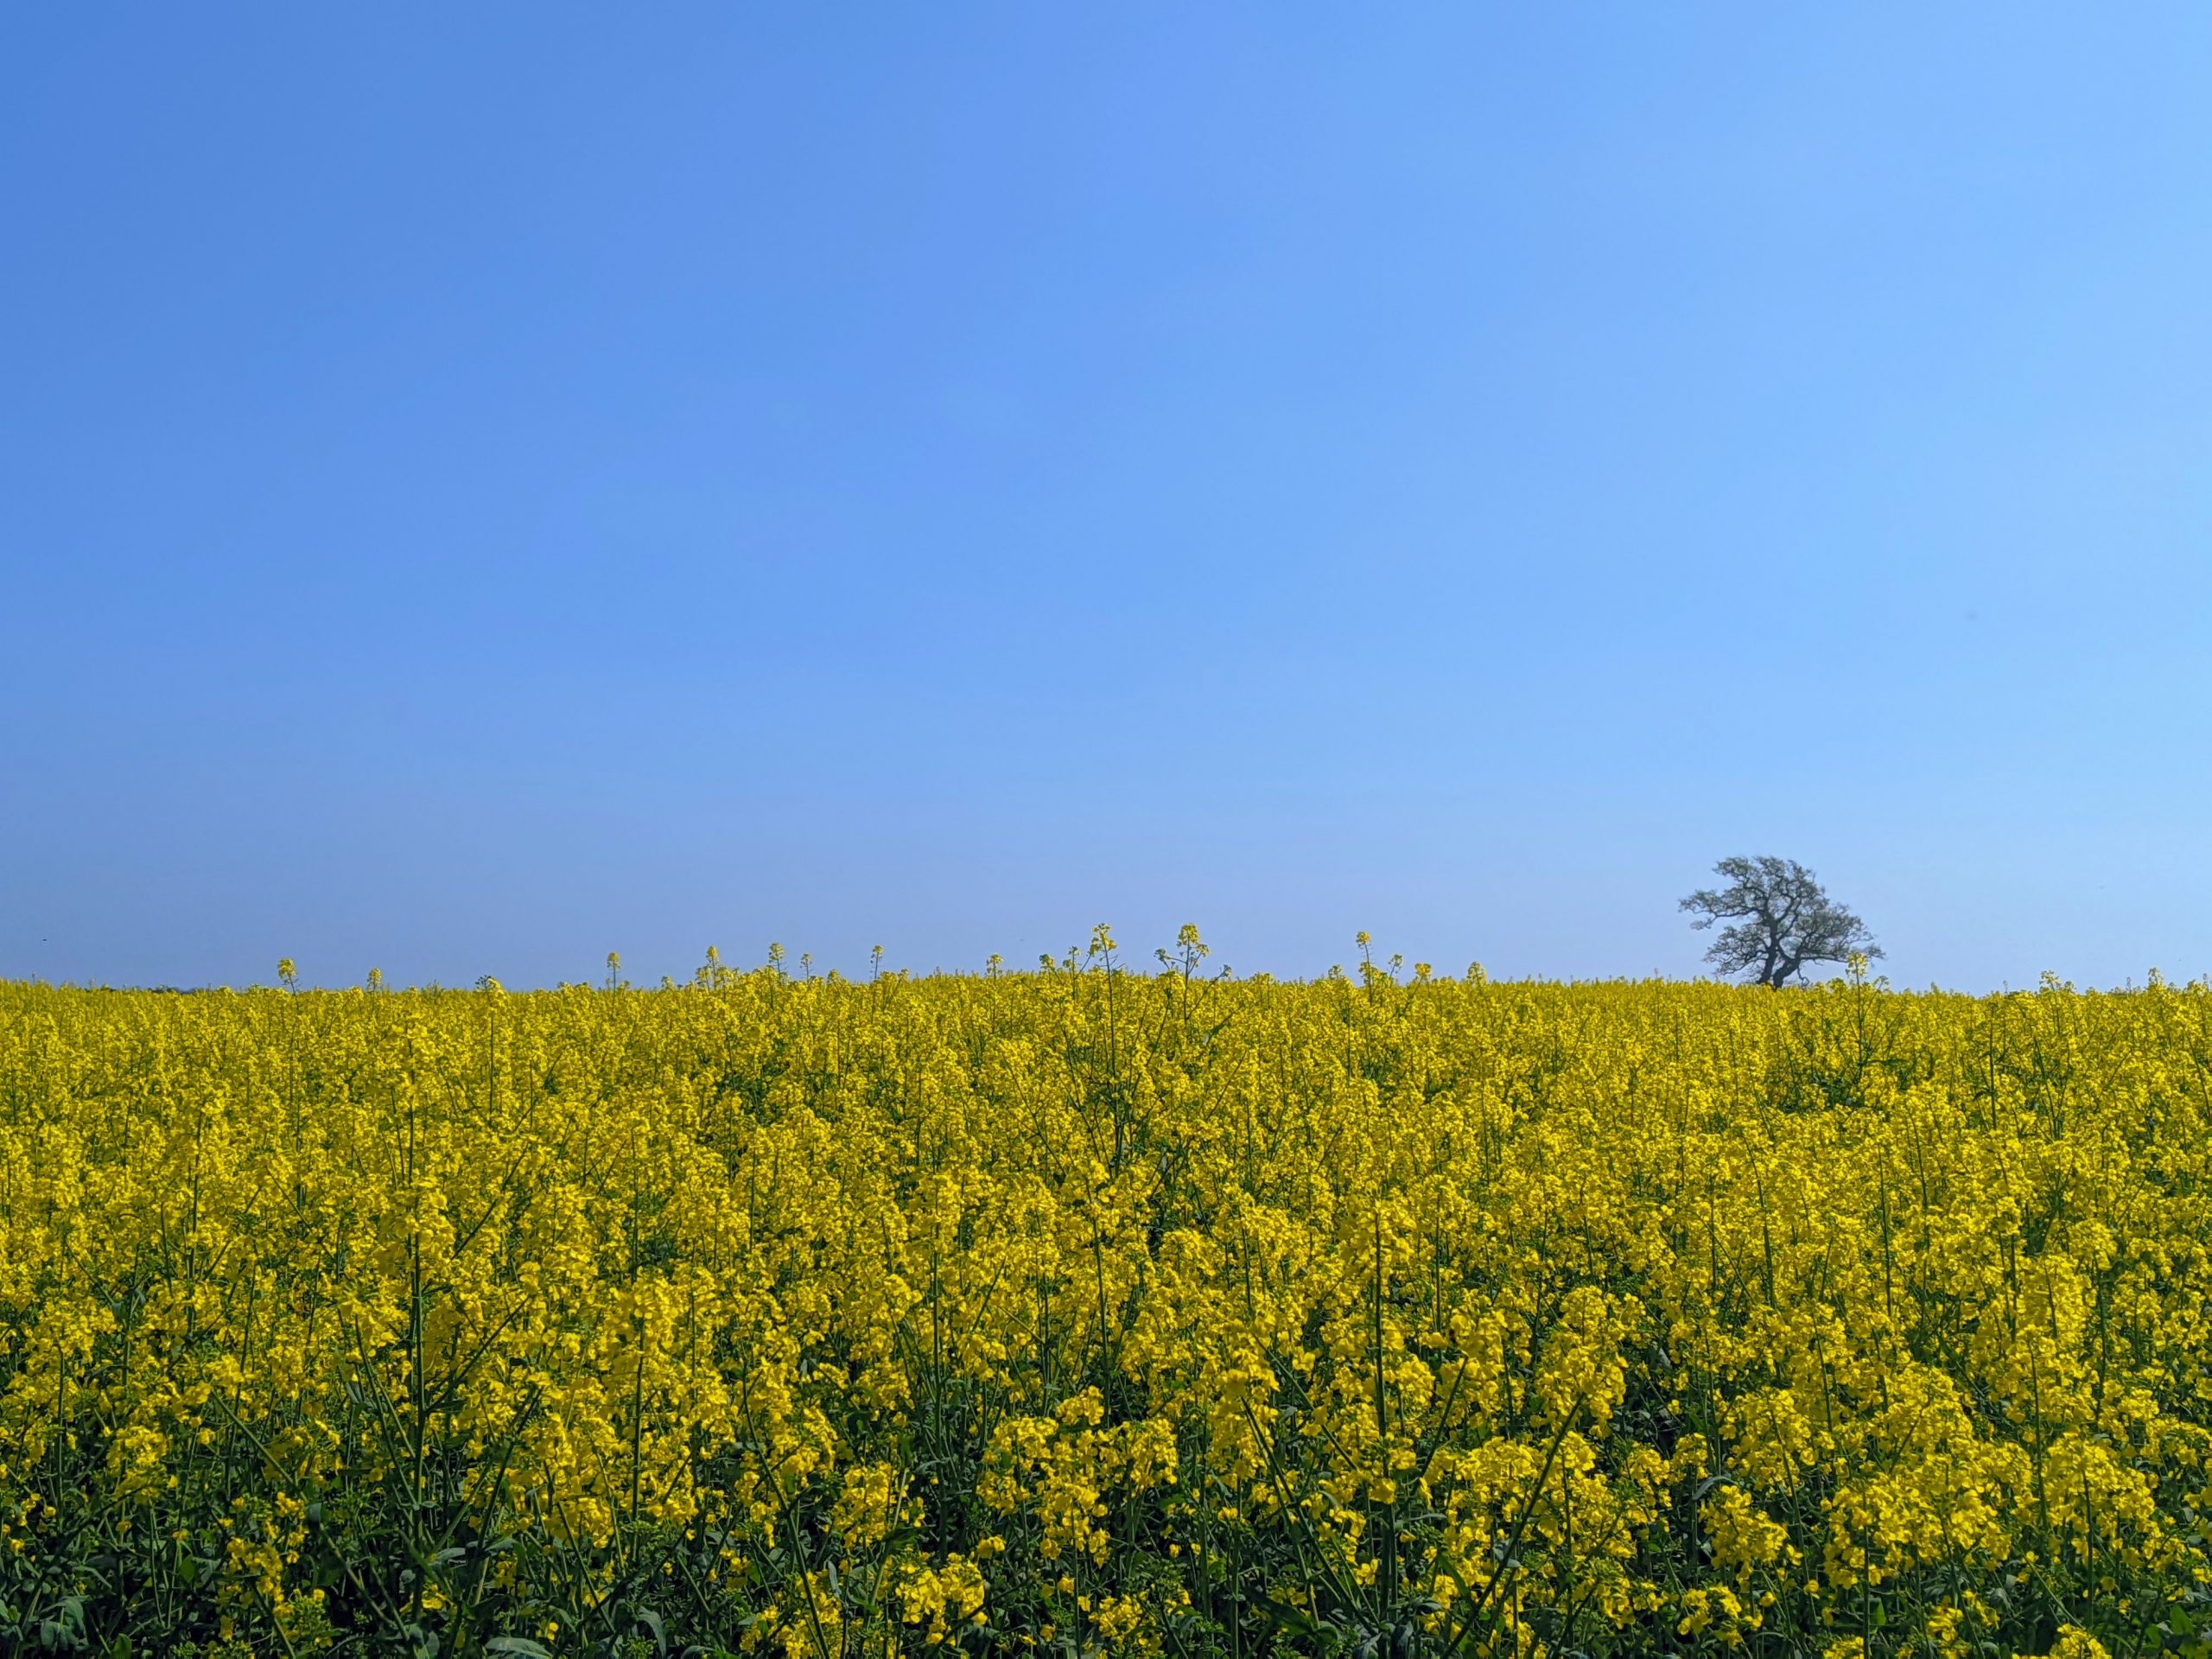 Yellow field of oilseed rape with blue sky, similar to Ukraine flag